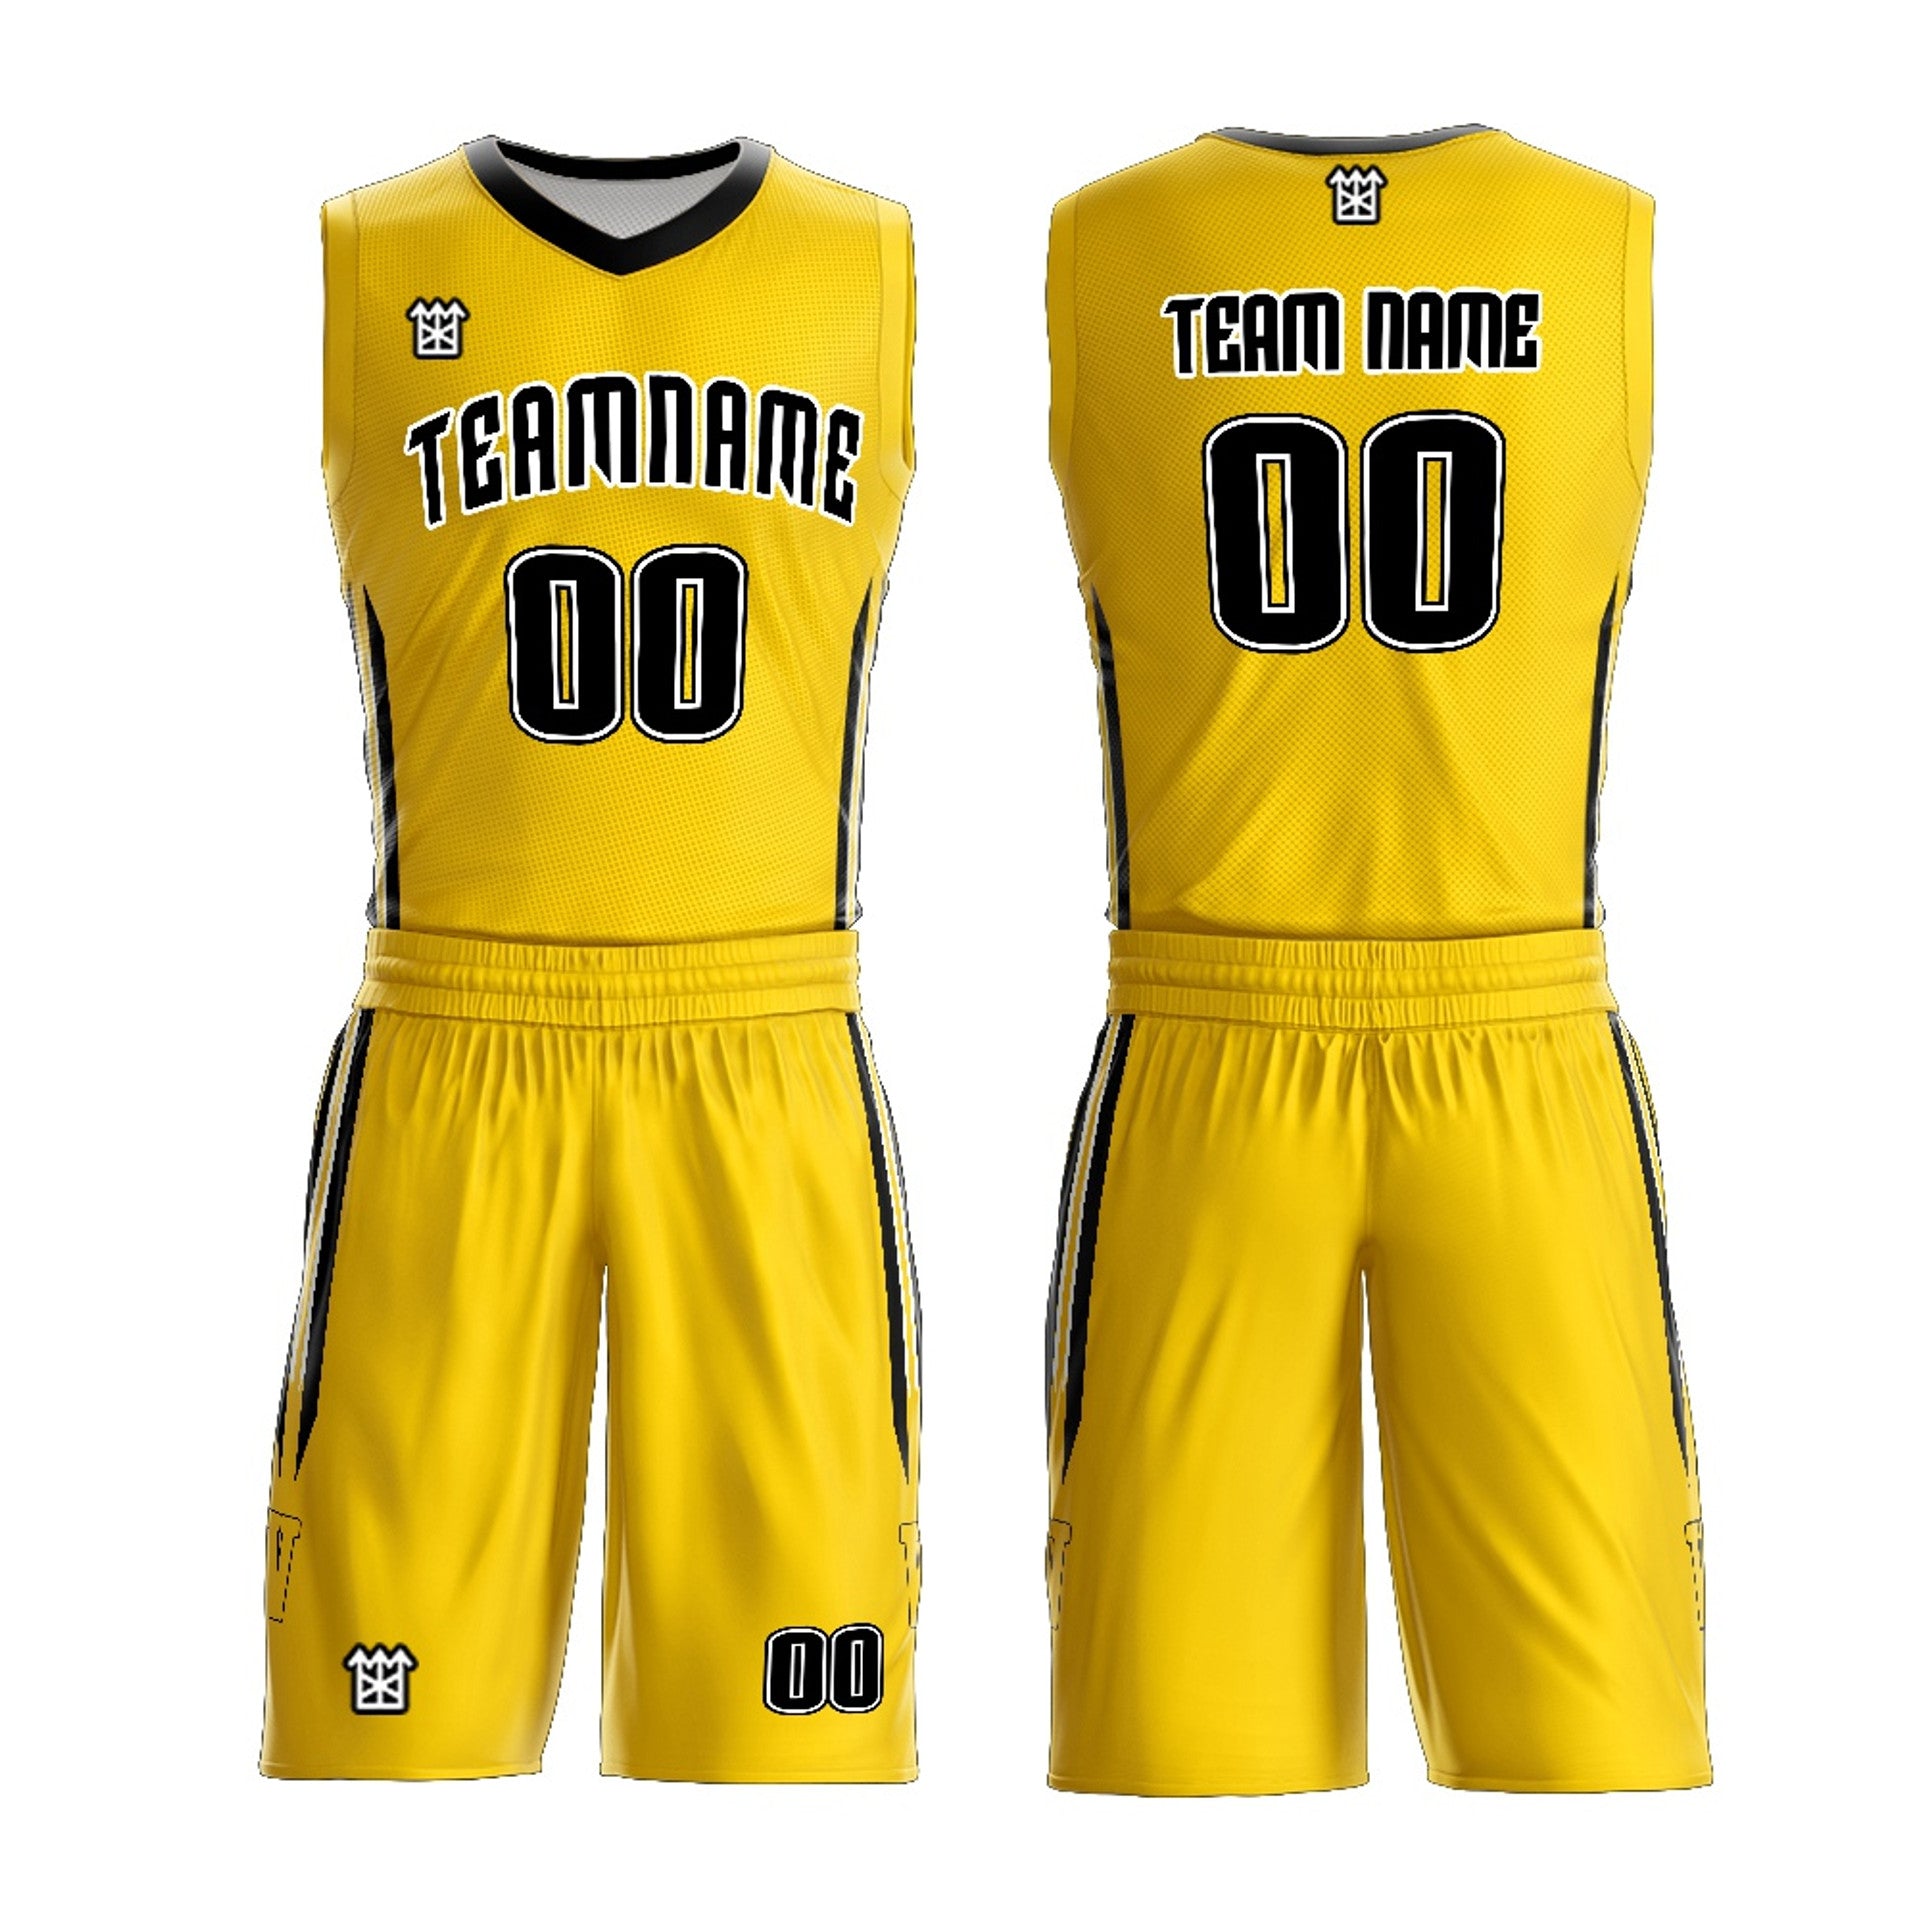 Custom basketball player online jersey design 